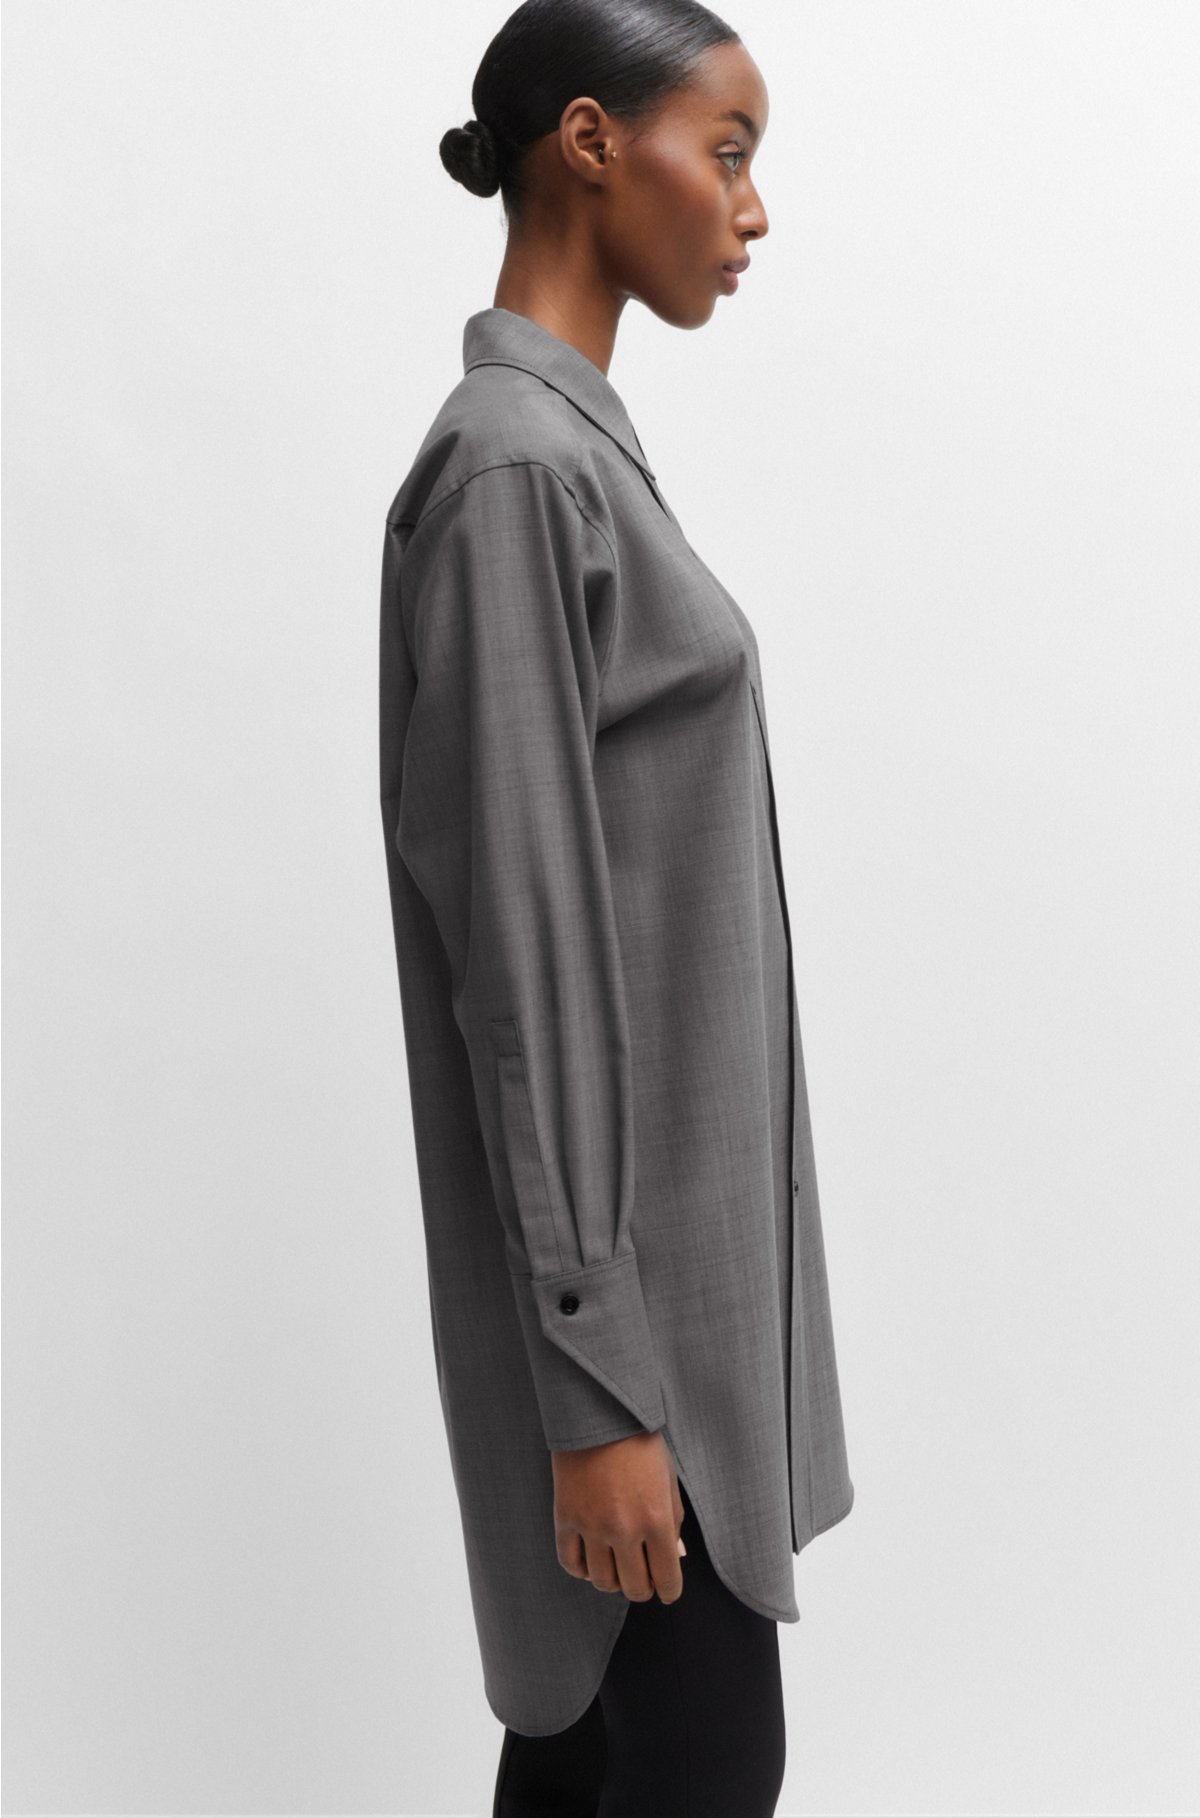 Mid-Grey Sharkskin Wool Dress Trouser - Junior's